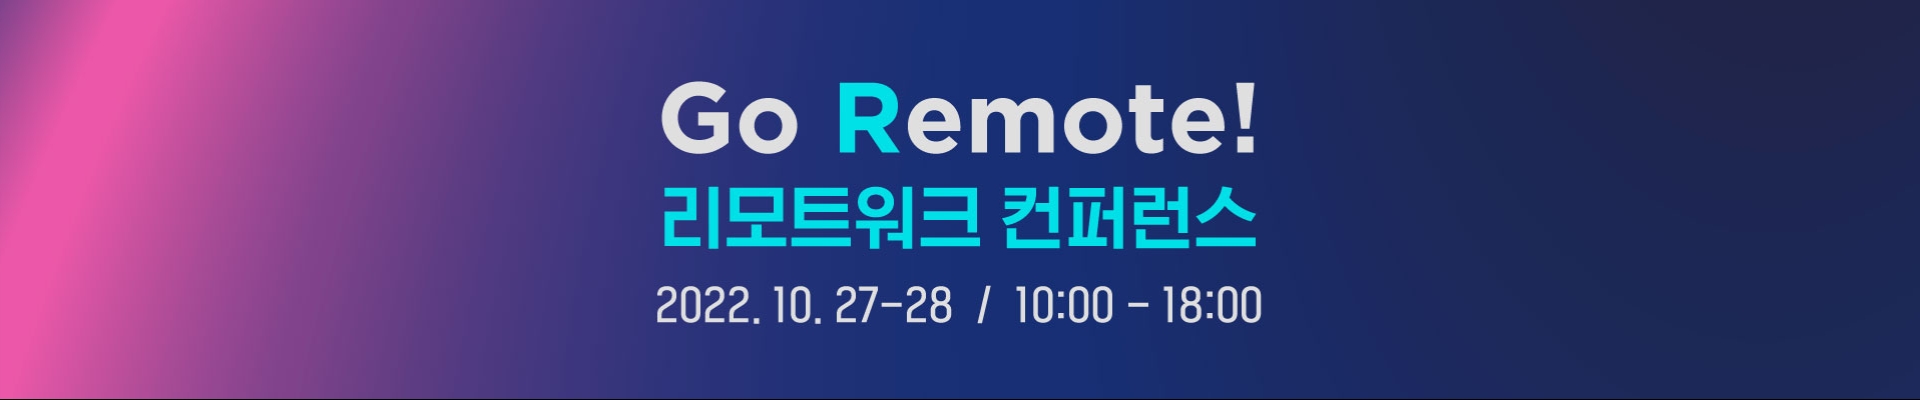 Go Remote! 리모트워크 컨퍼런스